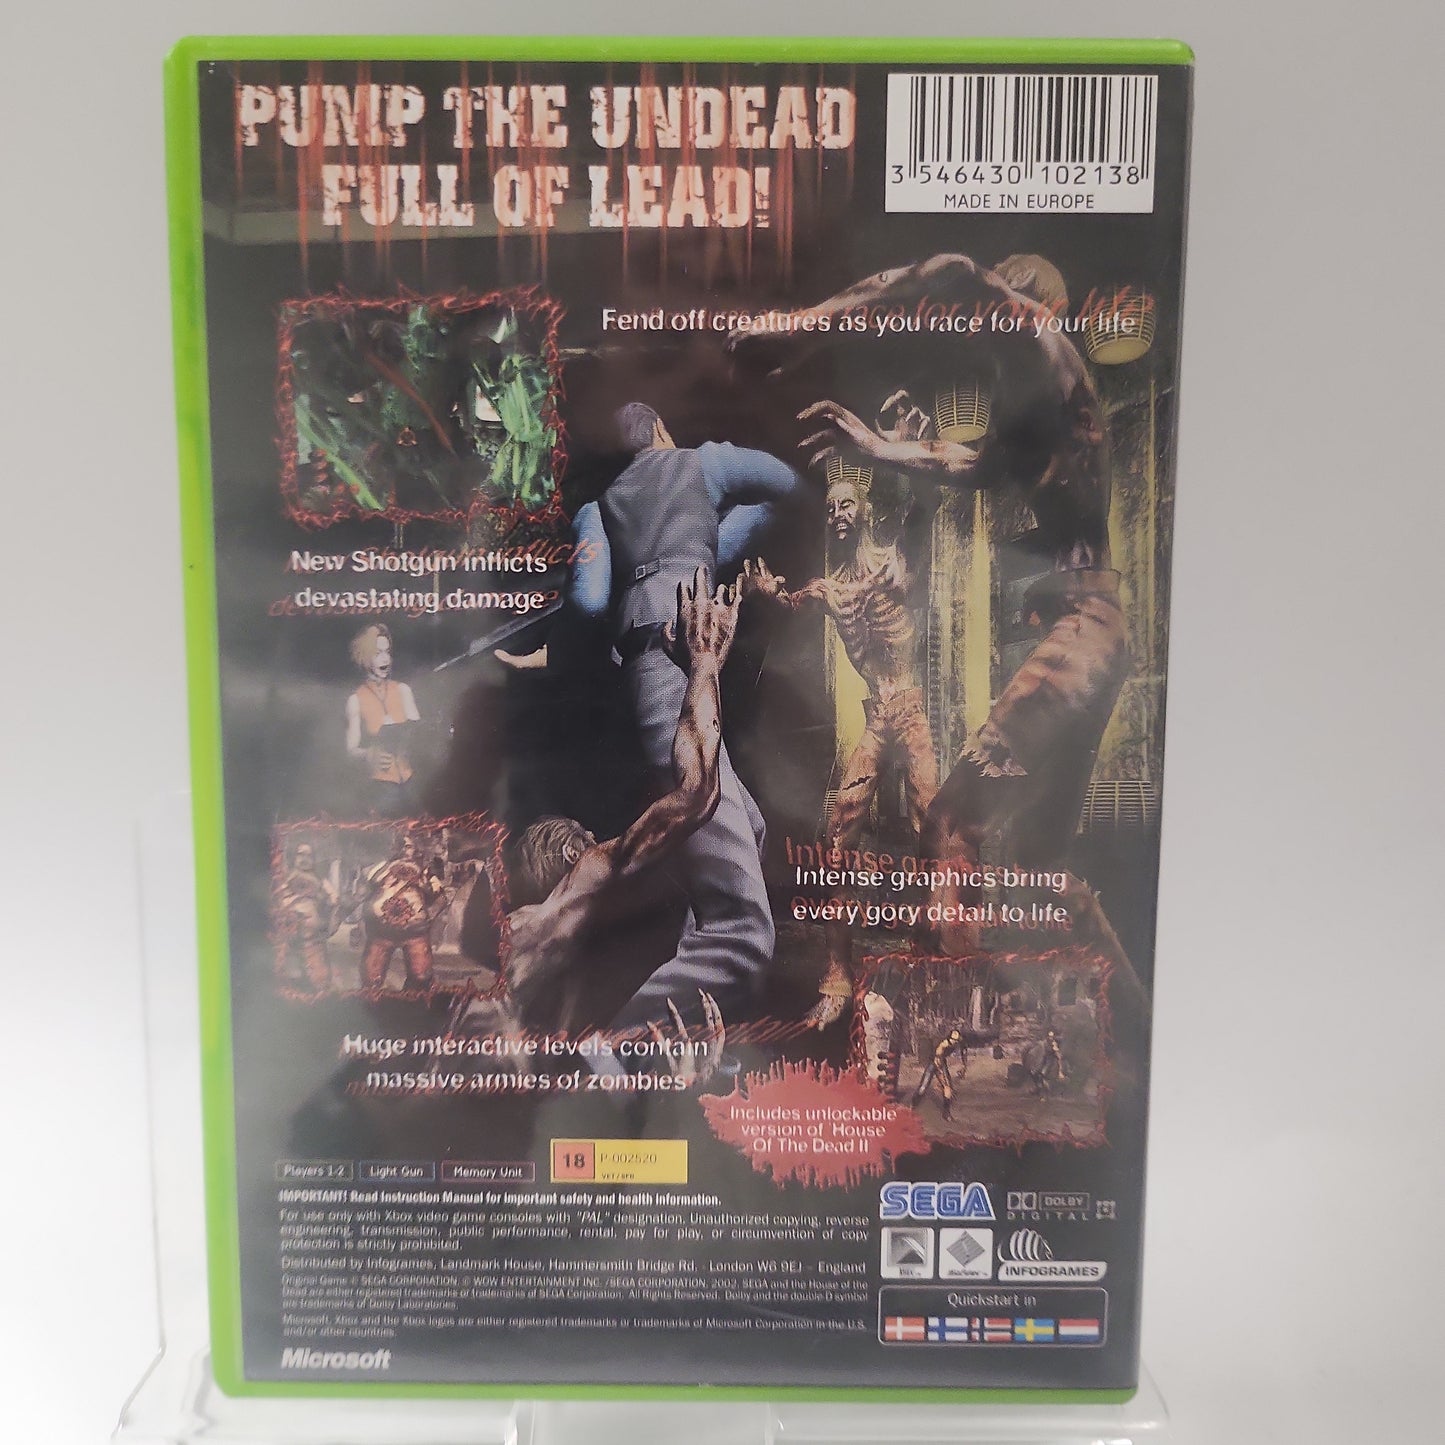 House of the Dead III Xbox Original